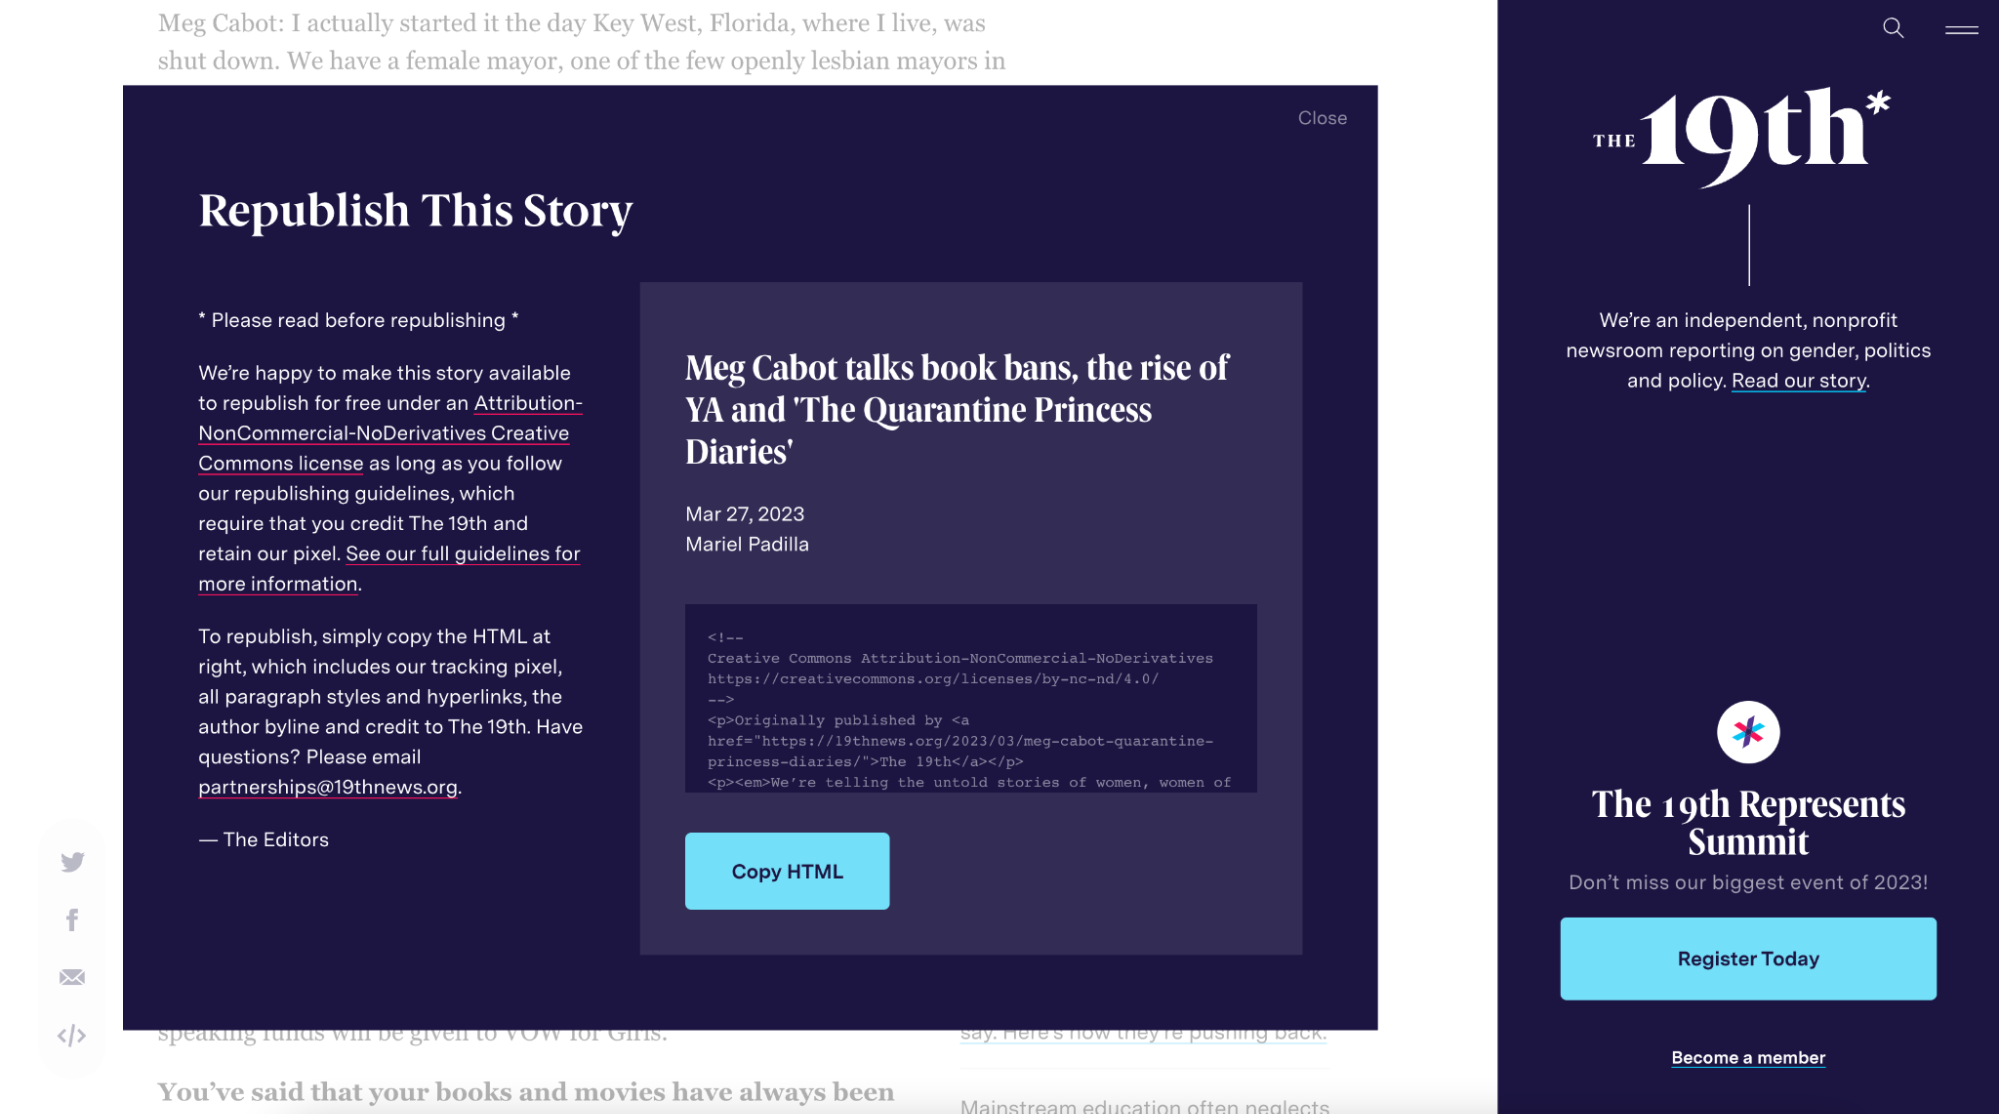 Screenshot from The 19th website showing republishing screen